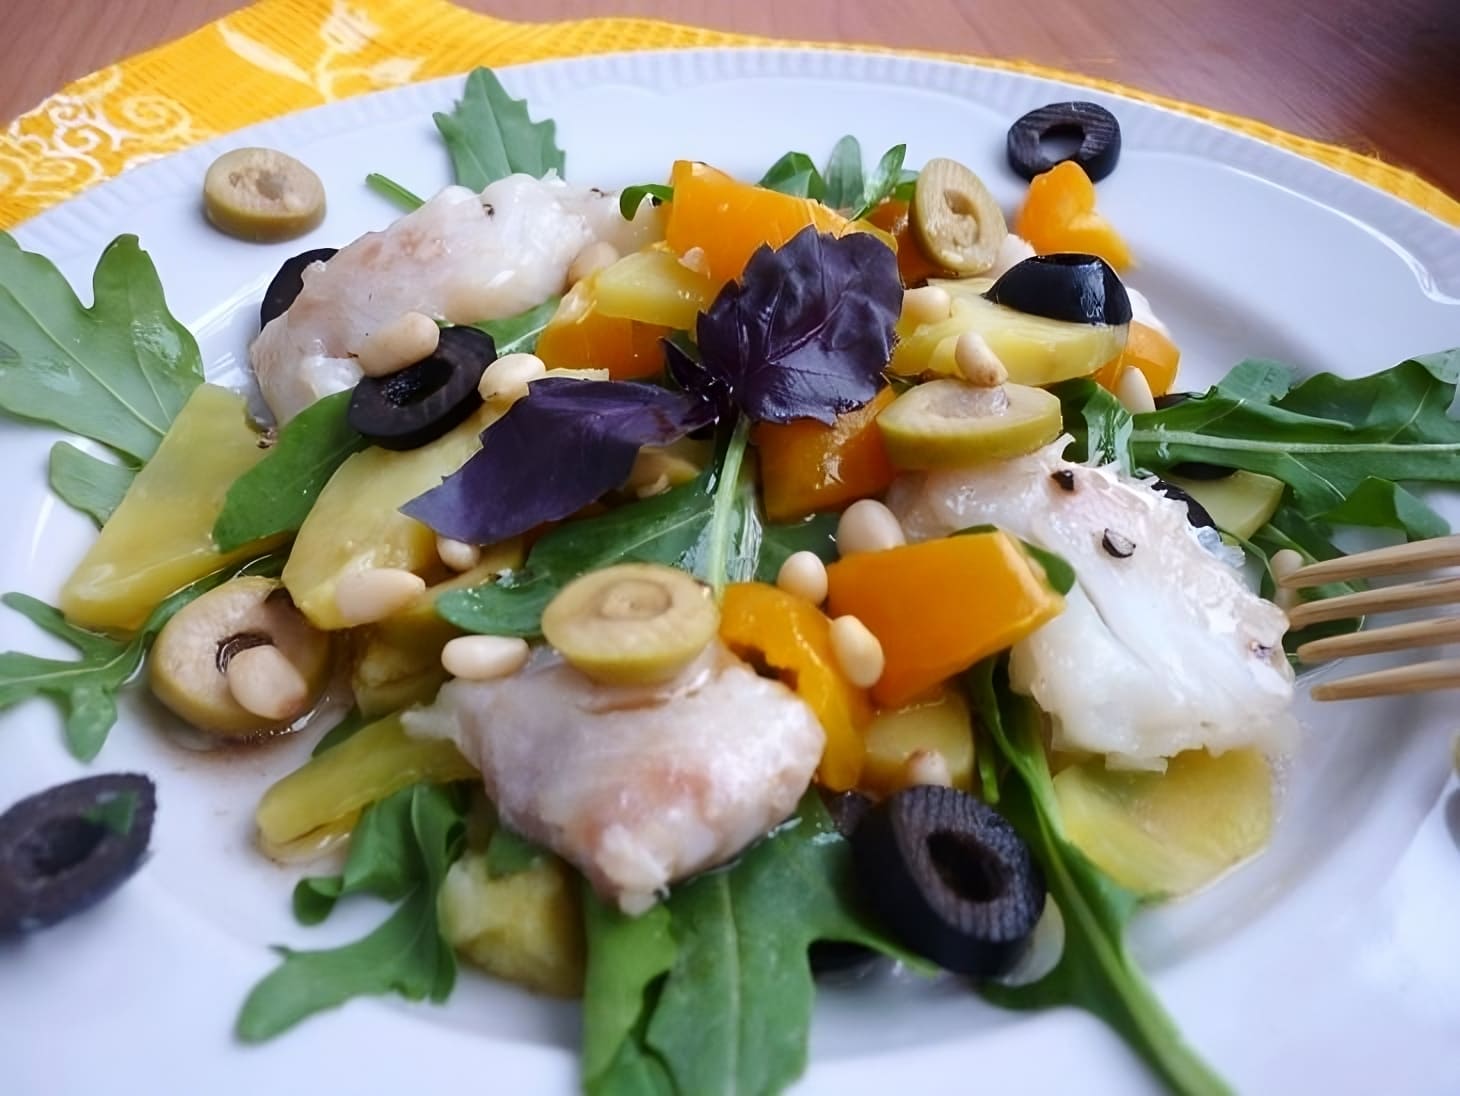 Milanese fish salad